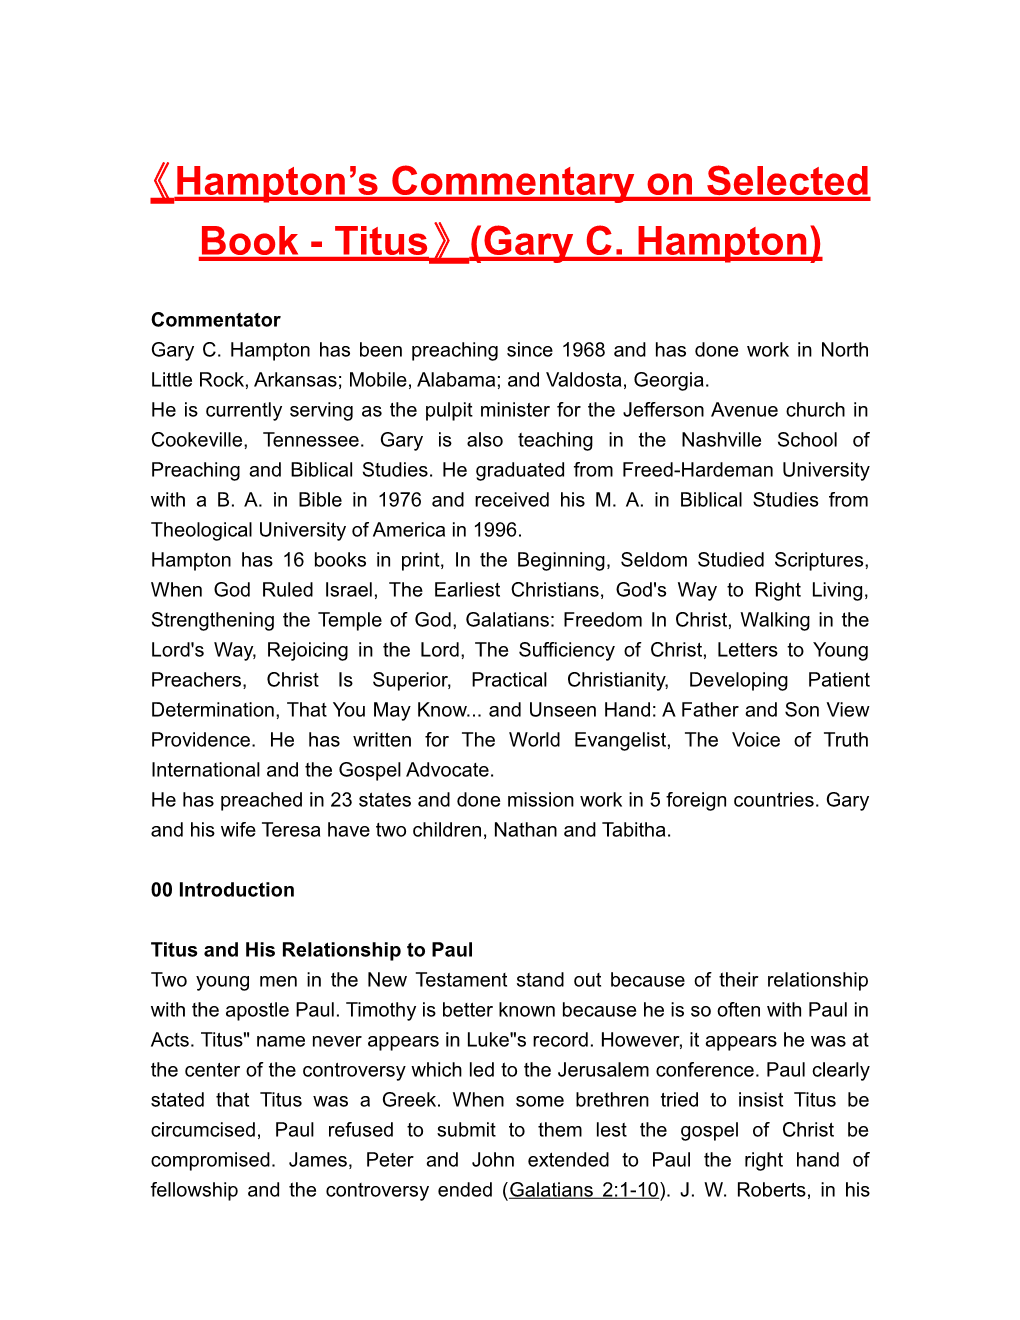 Hampton S Commentary on Selected Book - Titus (Gary C. Hampton)